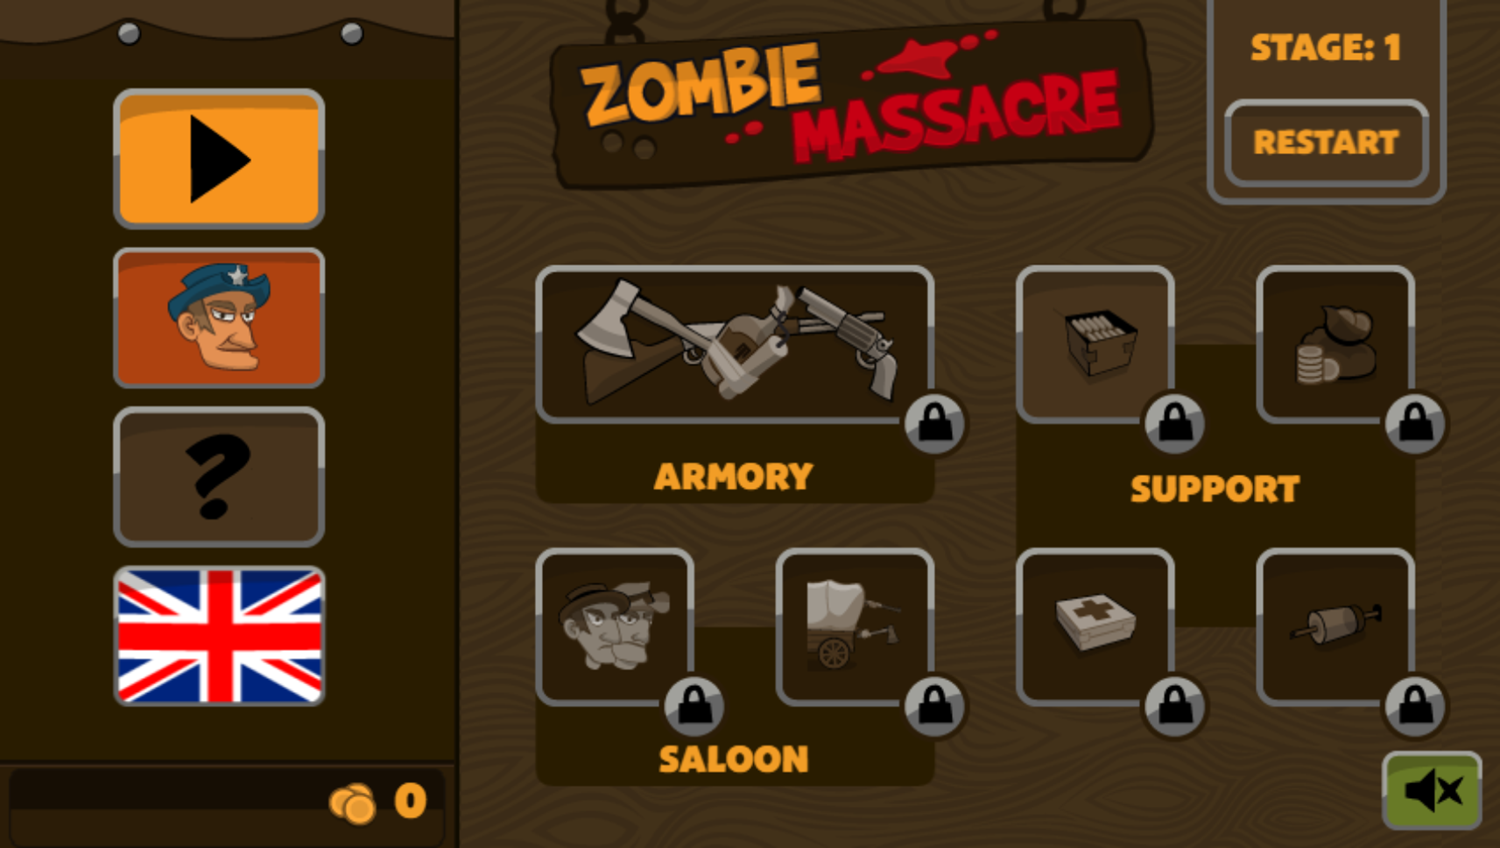 Zombie Massacre Game Welcome Screen Screenshot.